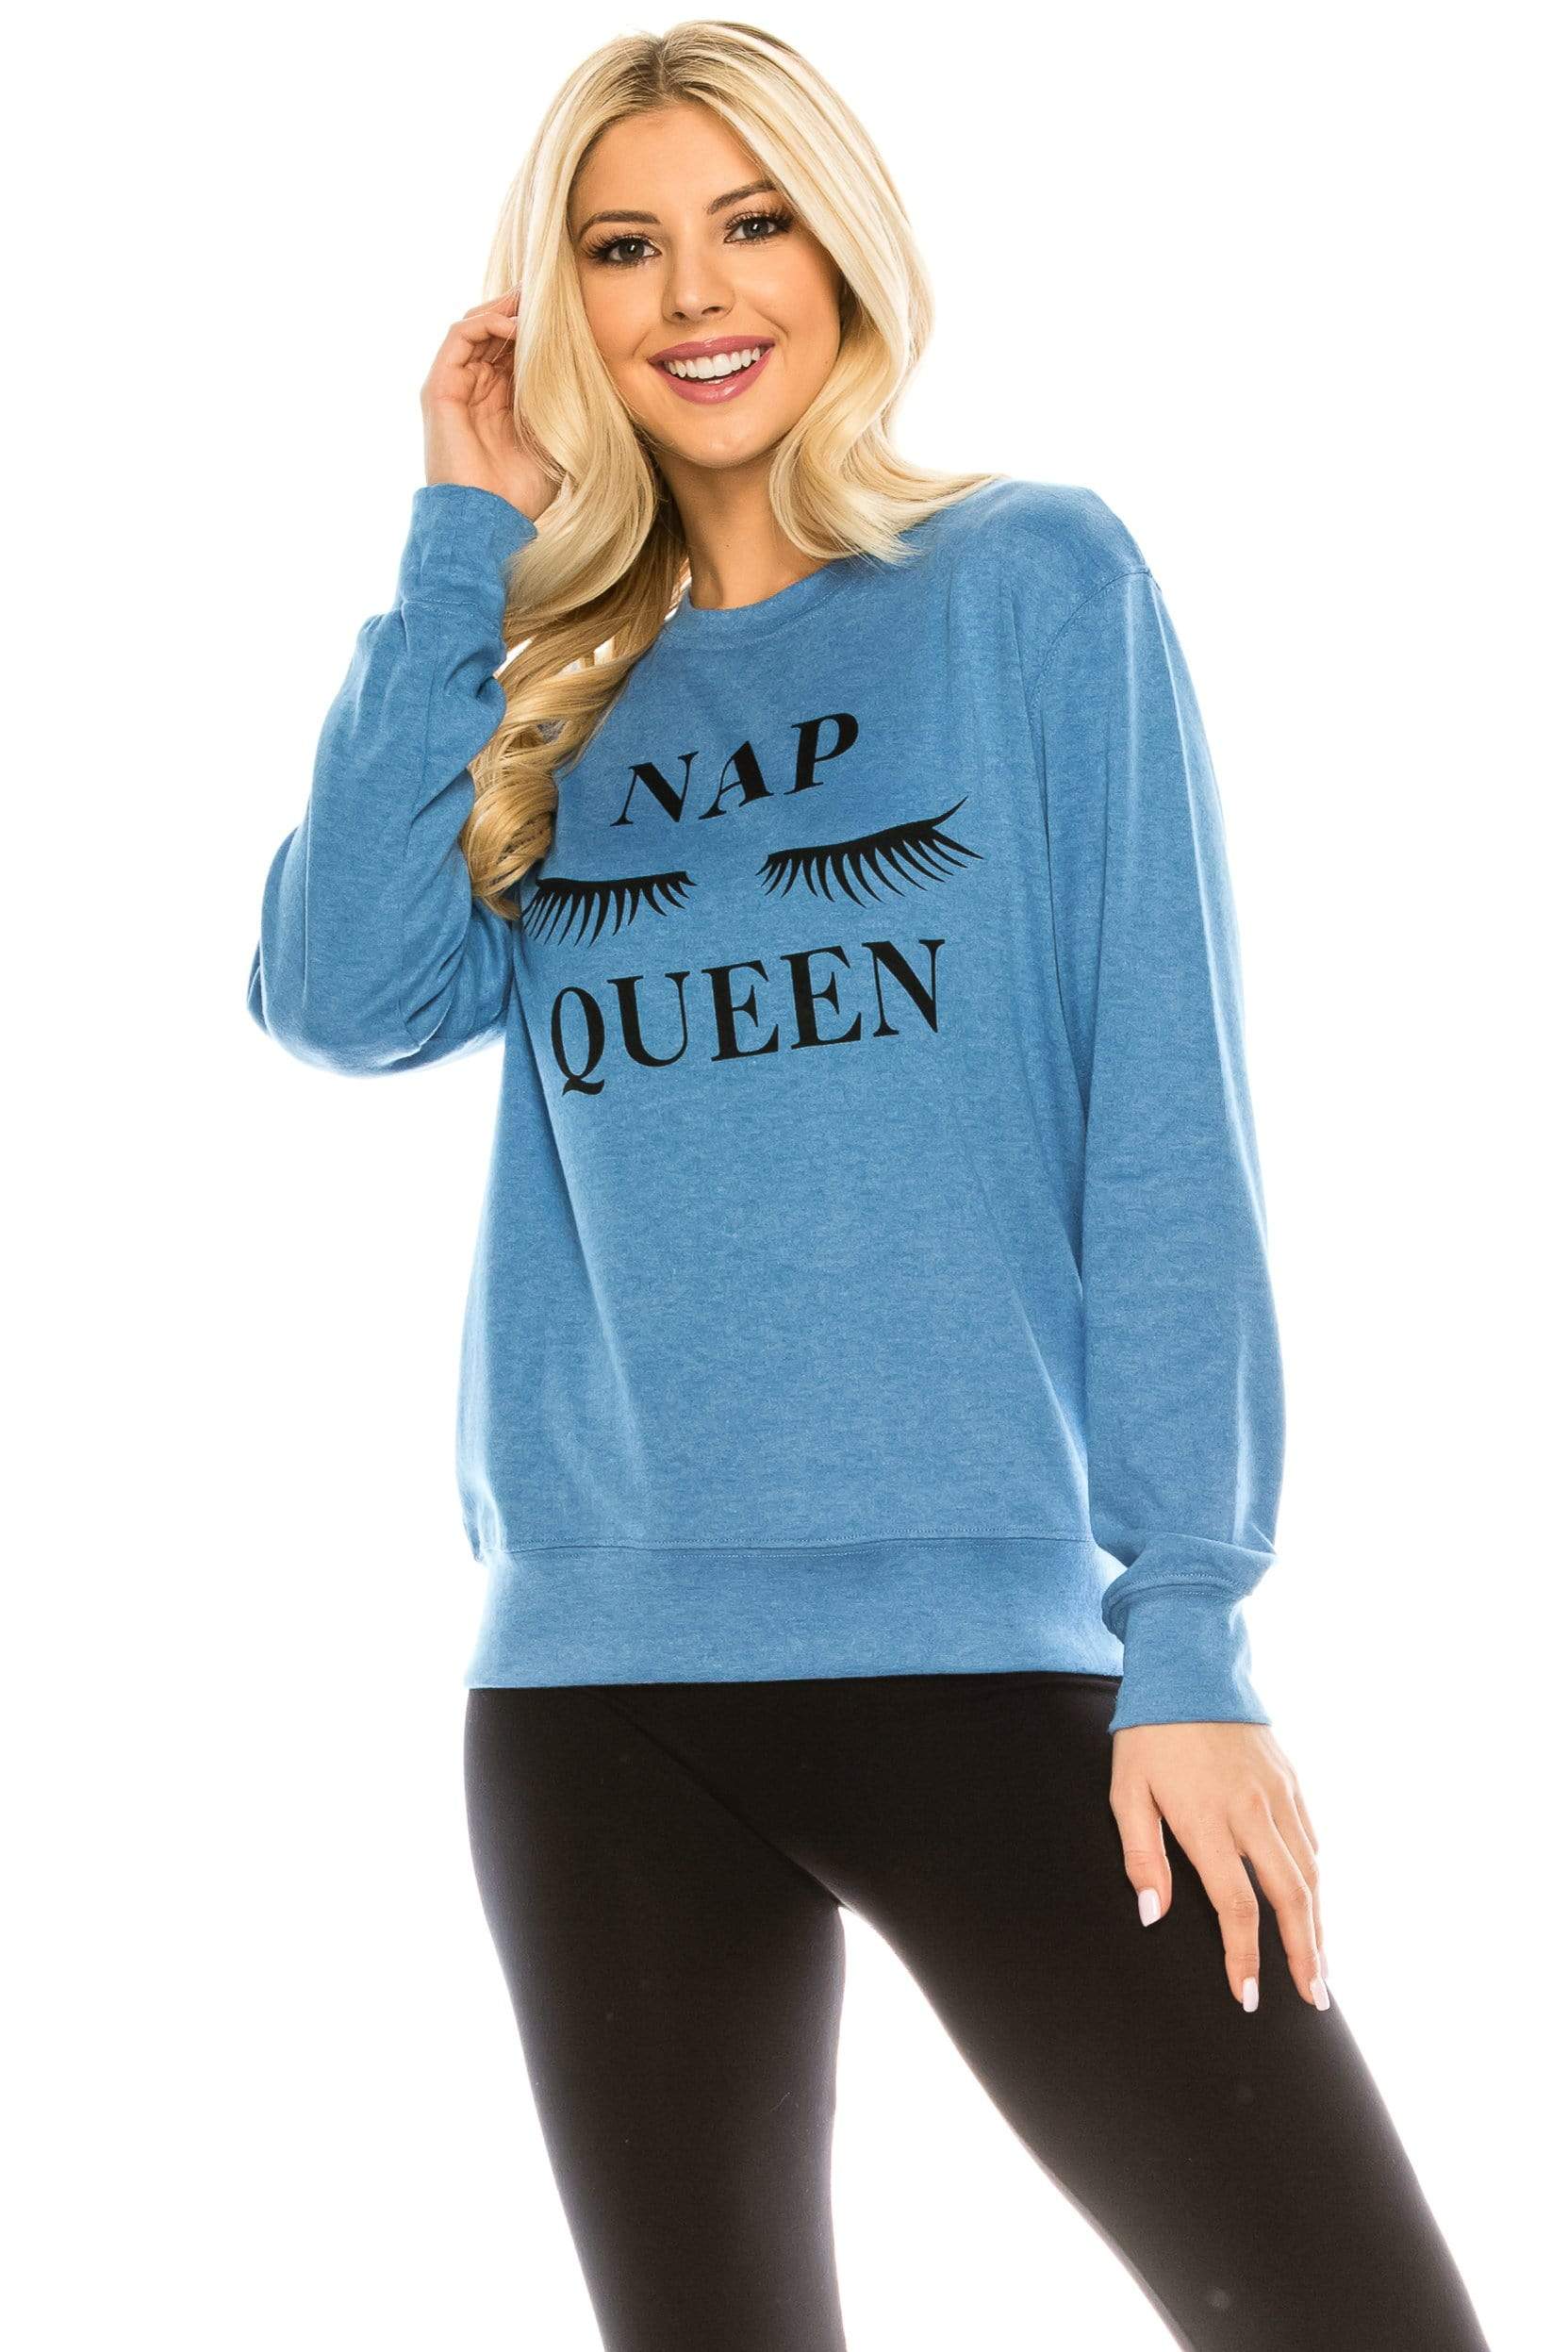 Women's Nap Queen Lounging Themed Sweatshirt with Bonus Eye Mask 2 Piece Gift Set Daily Haute